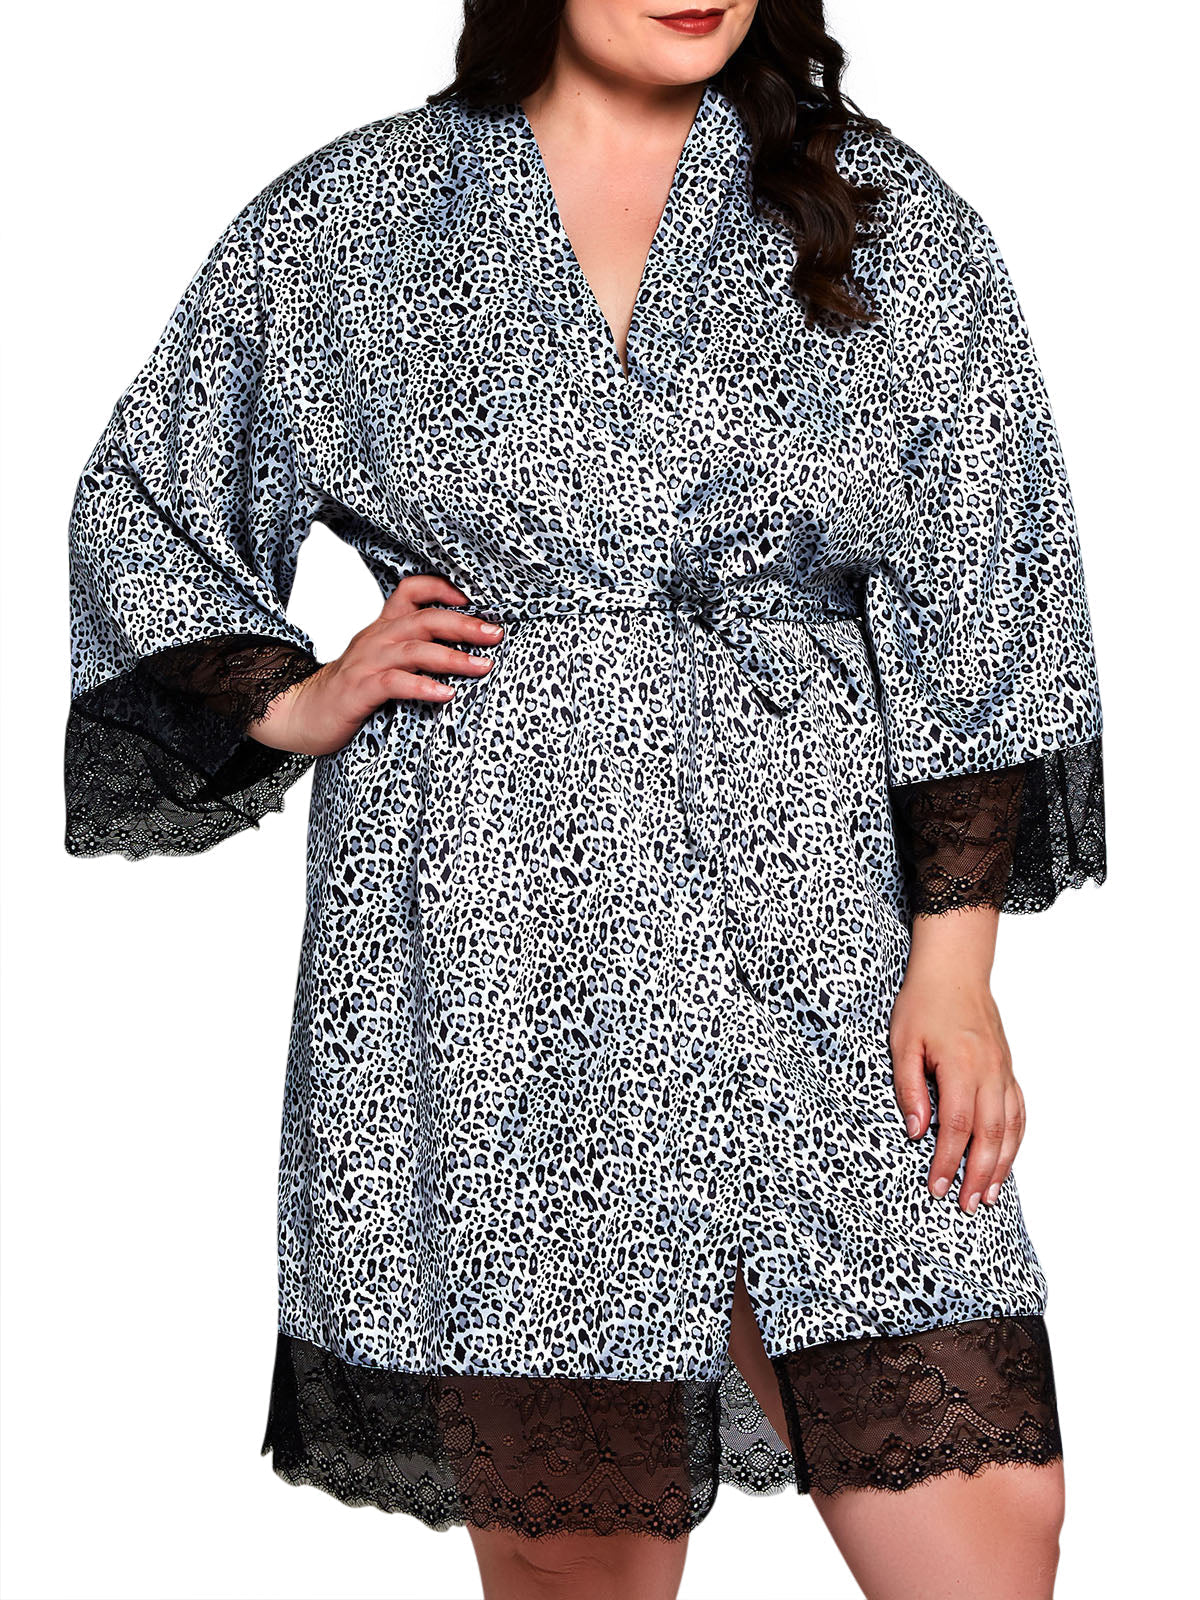 iCollection Plus Size Sleepwear Carmen Plus Size Robe